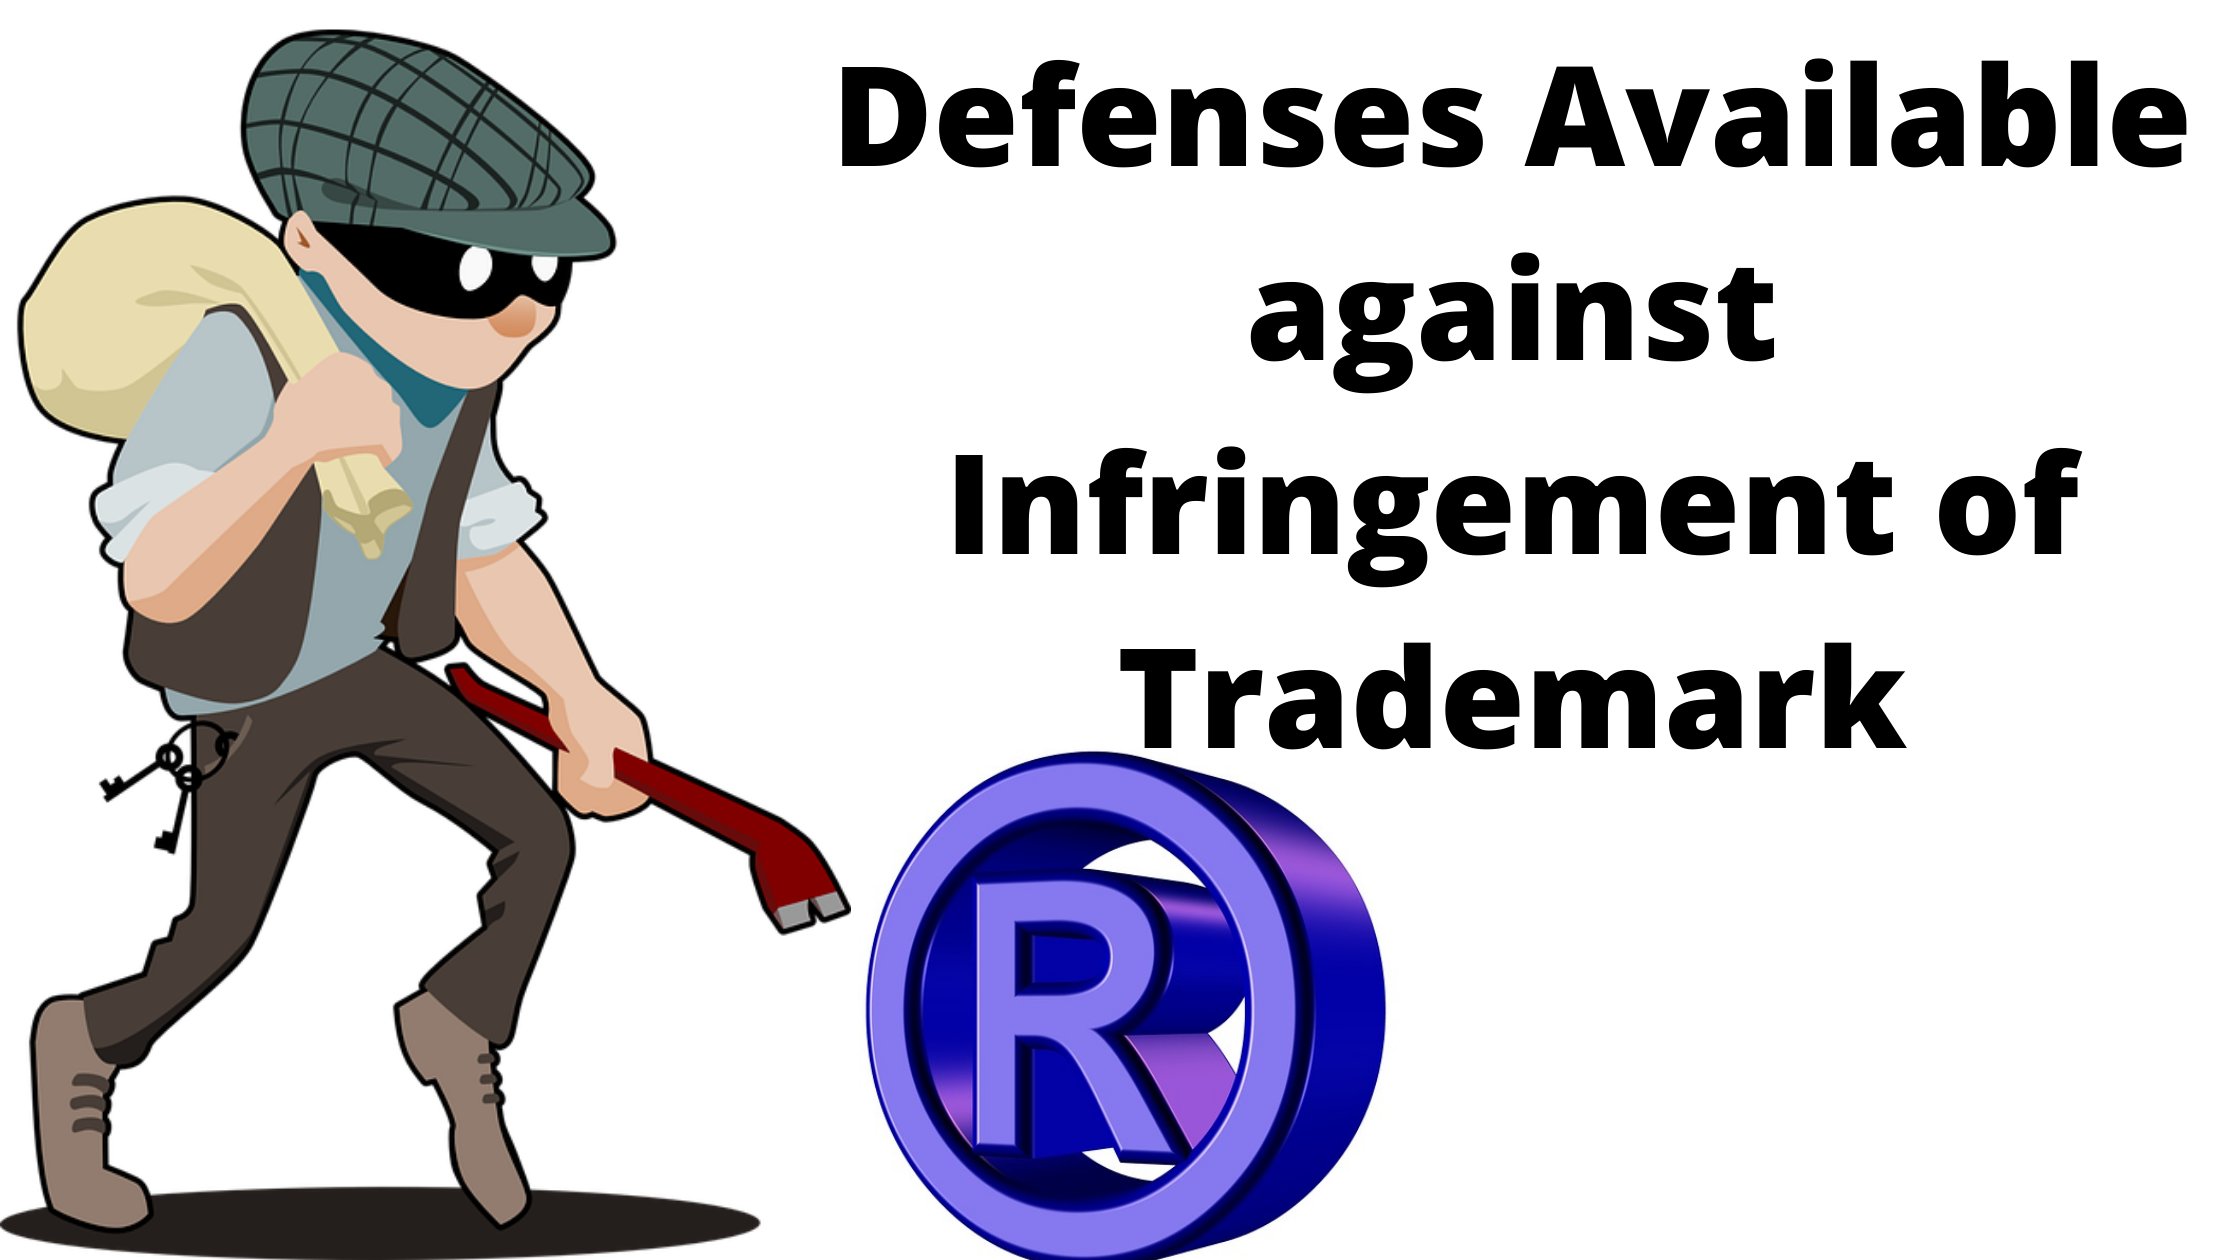 Defenses Available against Infringement of Trademark